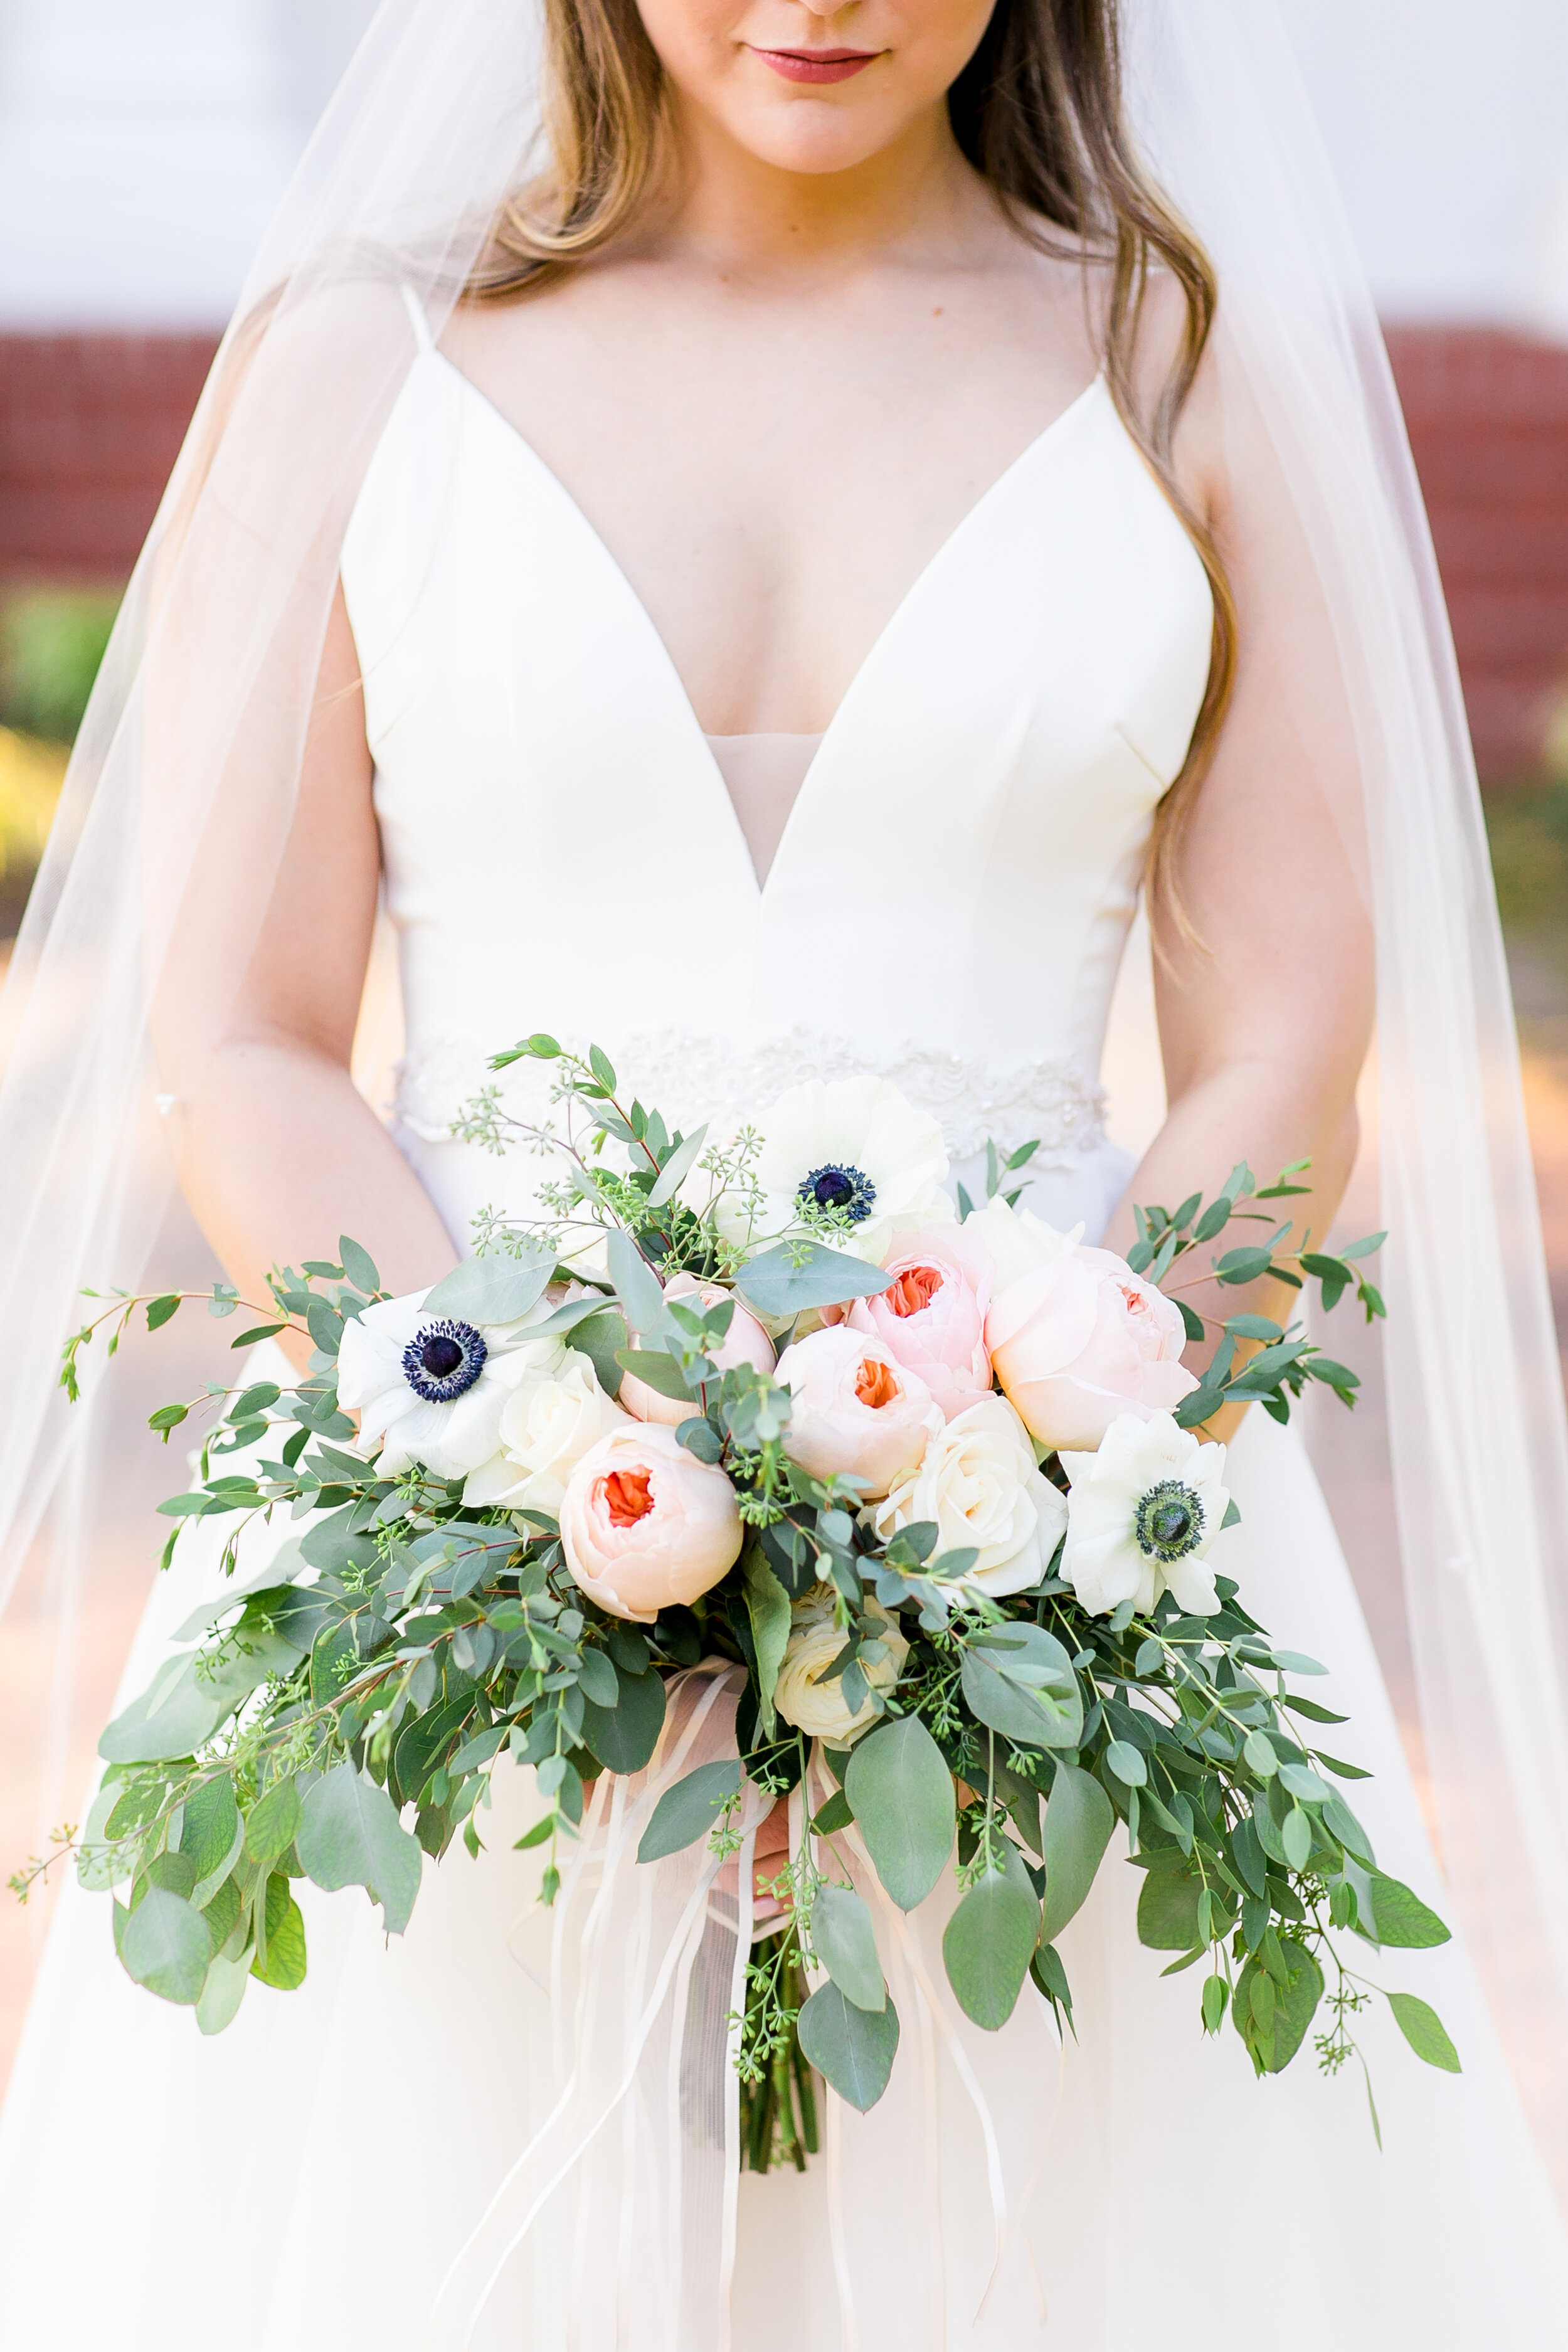 memphis-wedding-florist-pink-white-spring-may-bride-floral-arrangement